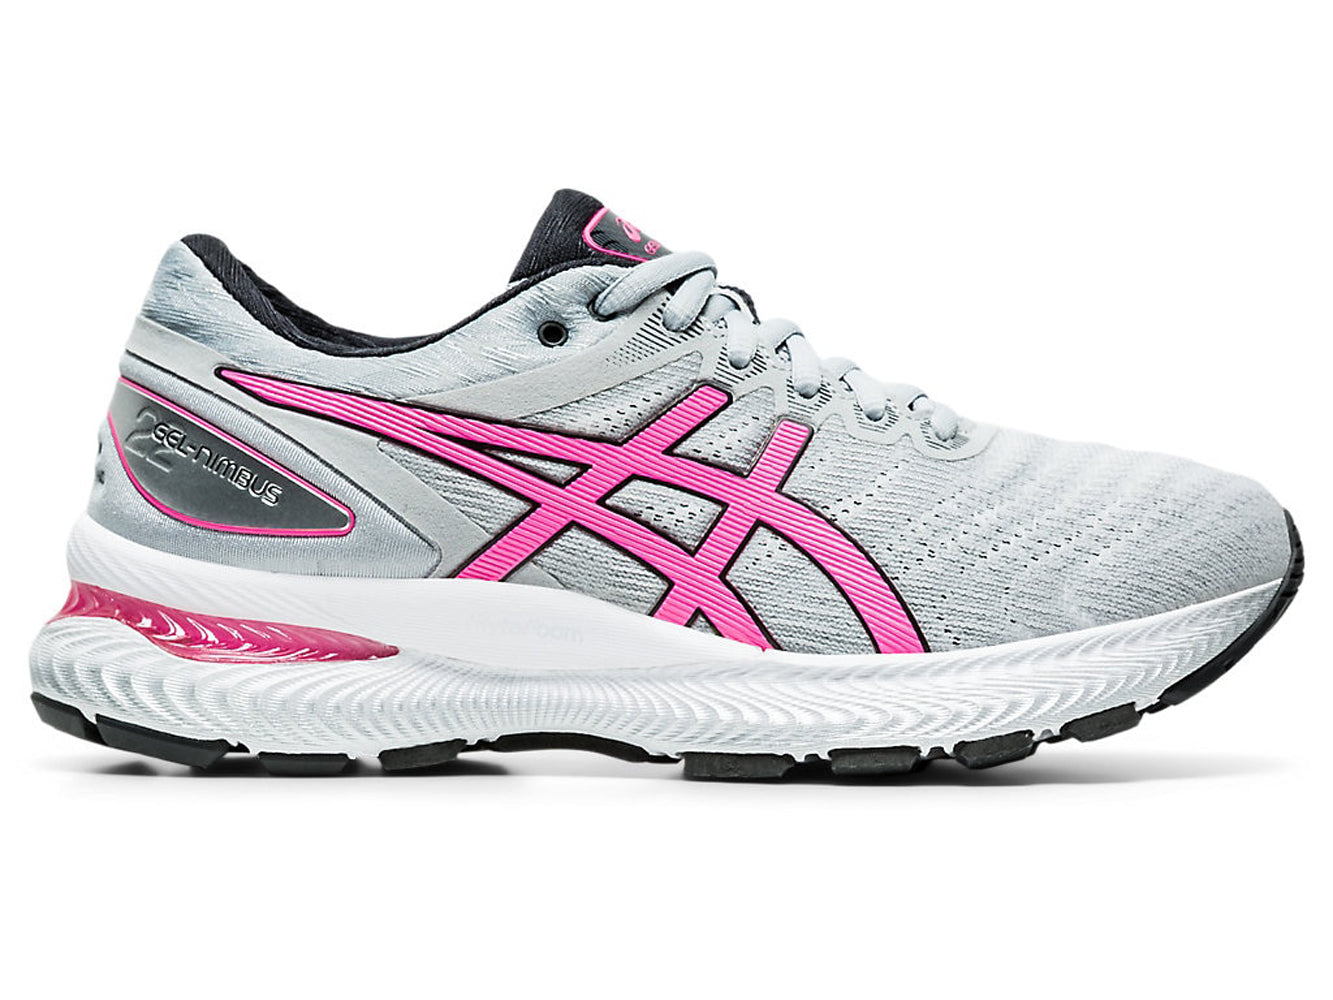 Women's Asics GEL-Nimbus 22 Running Shoe in Piedmont Grey/Hot Pink from the side